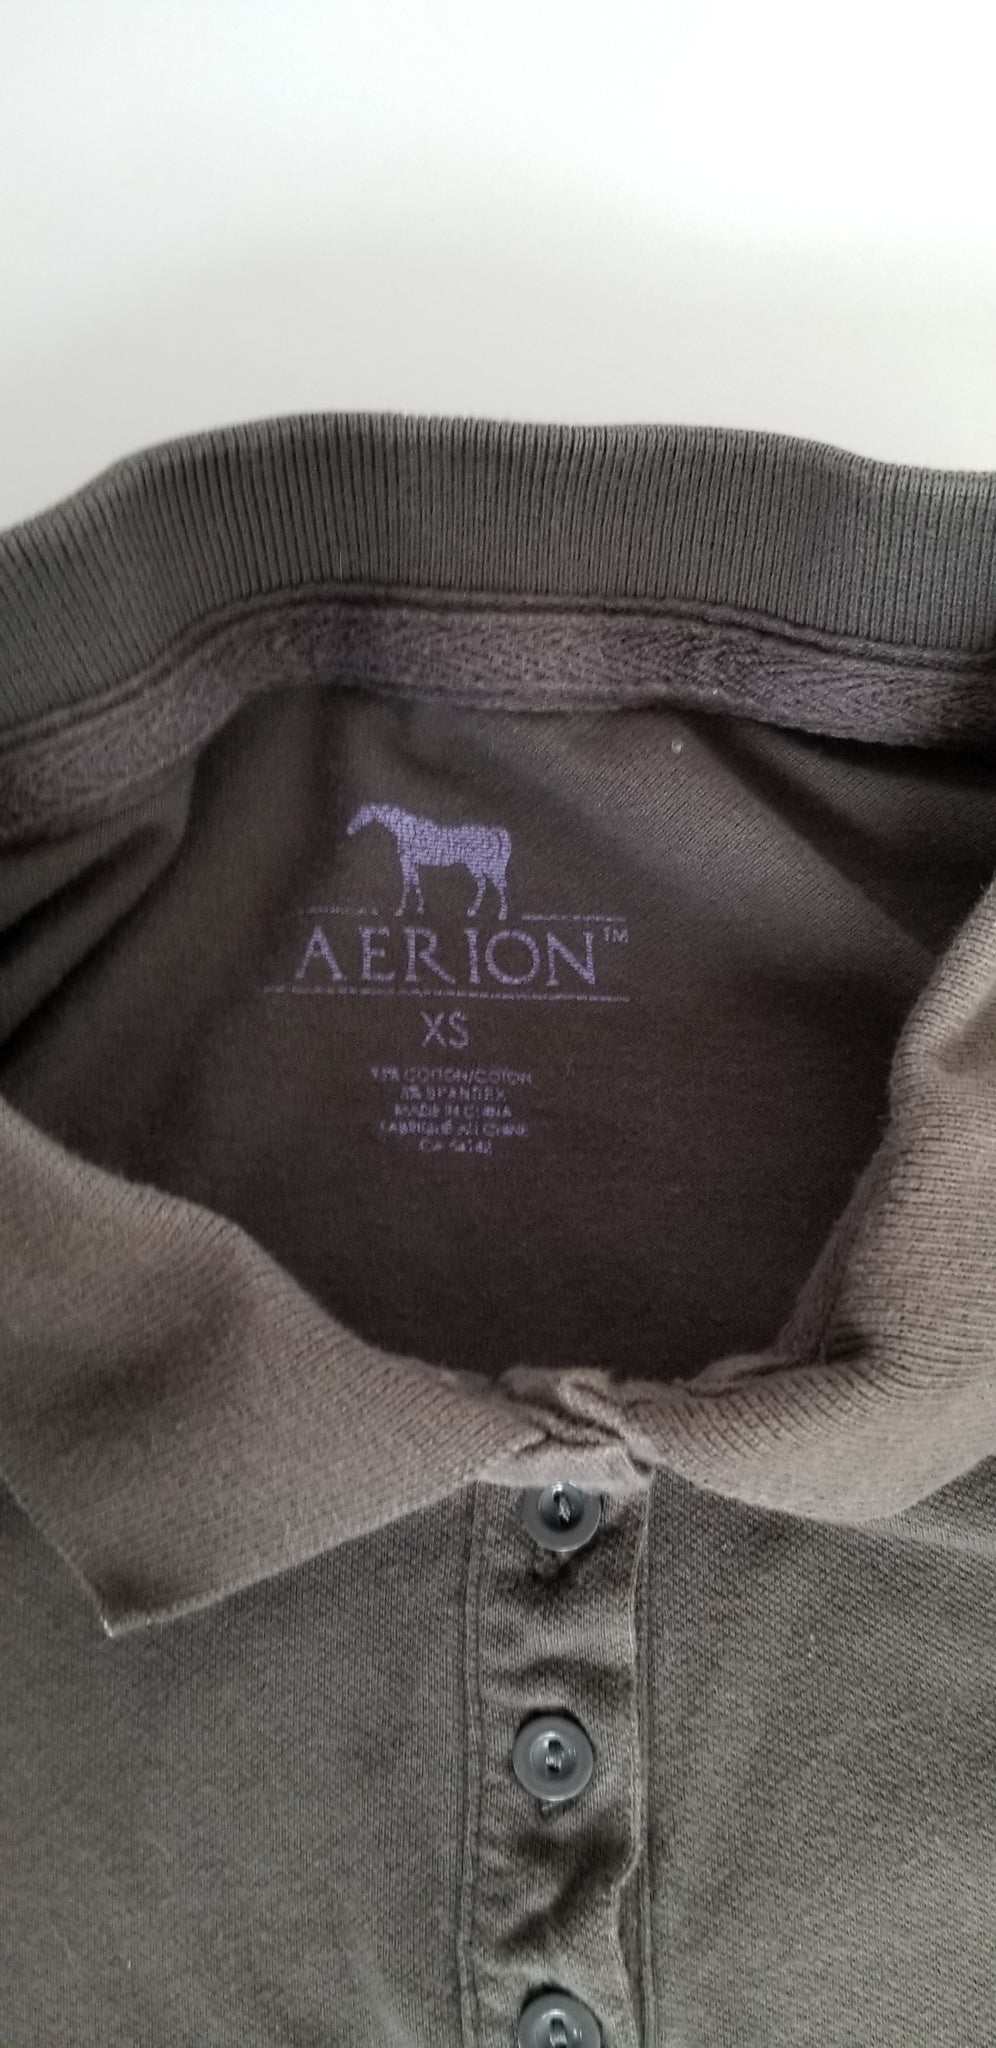 Aerion Pique Polo Shirt - Brown - Women's XS